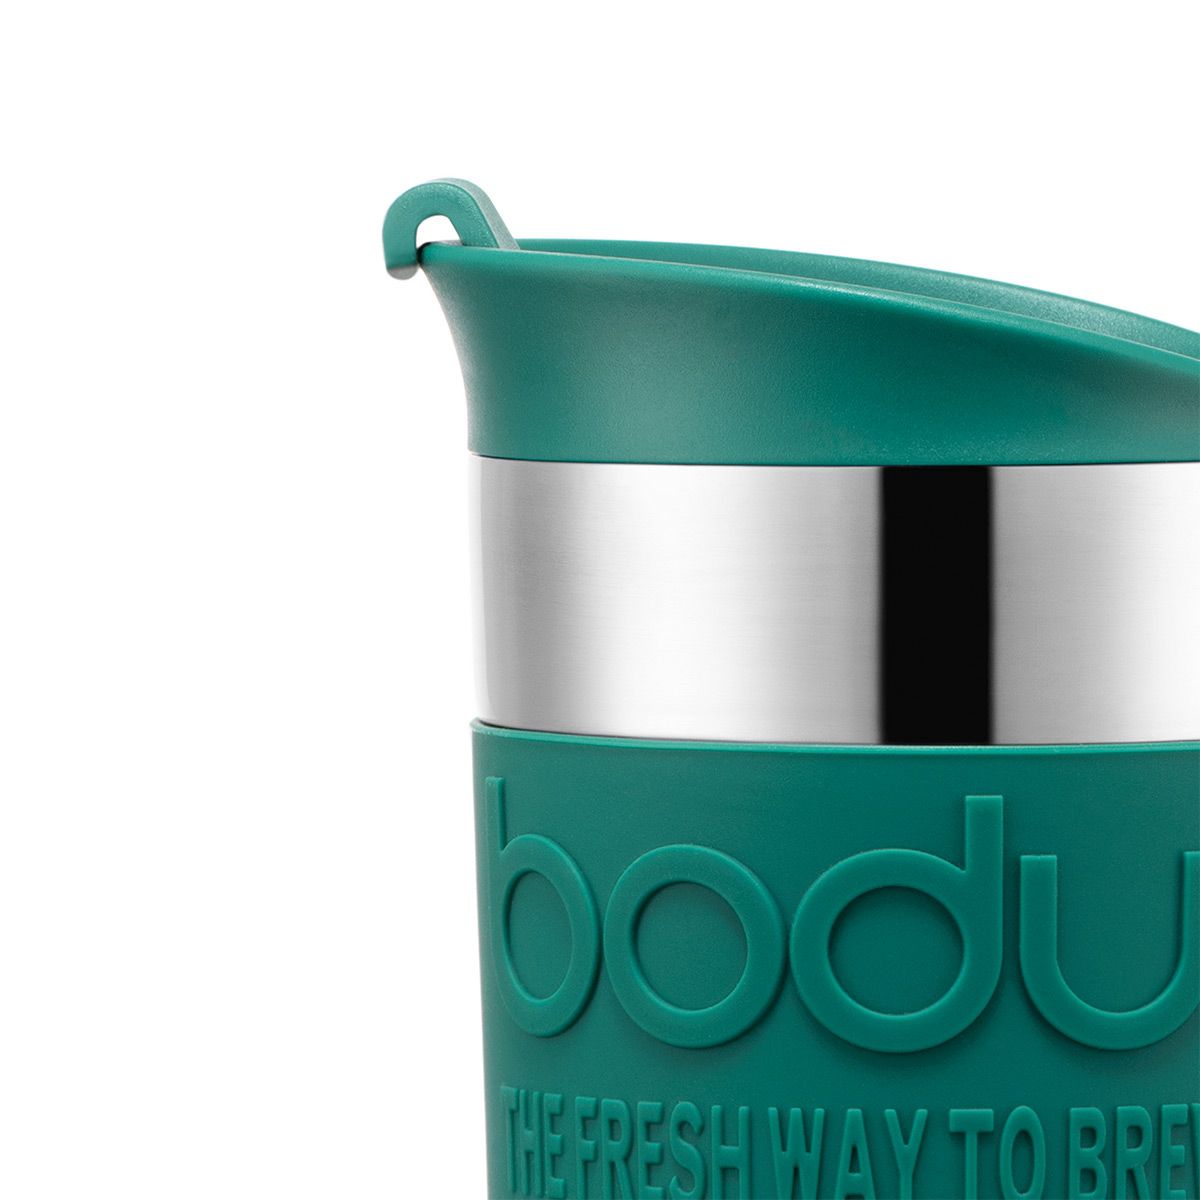 Black 0.35 L Bodum Vacuum Travel Mug Small 